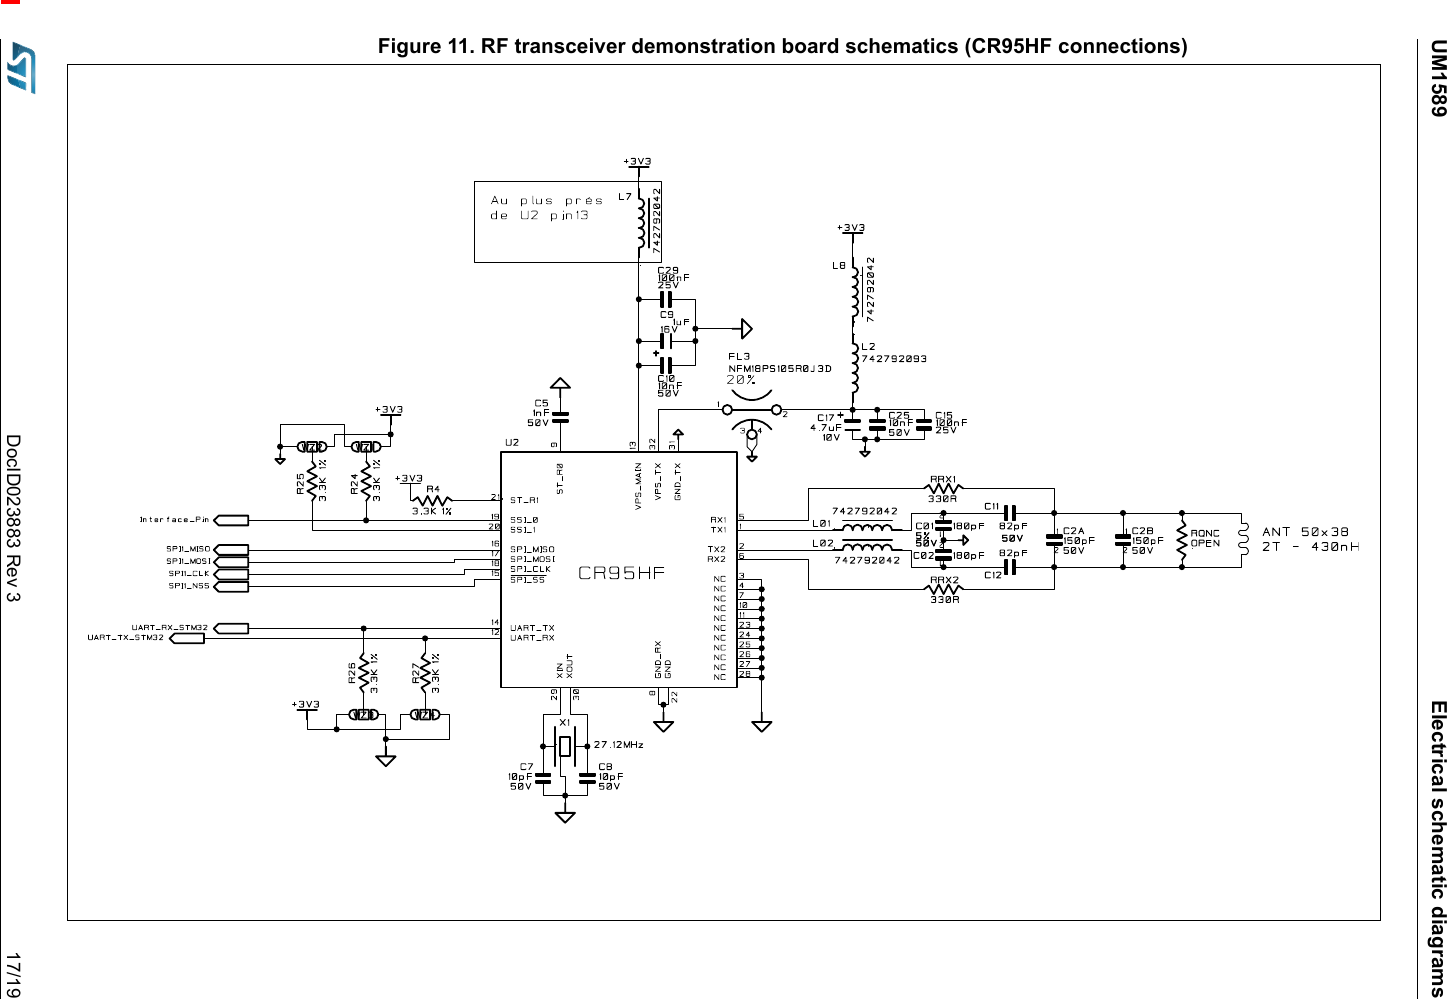 UM1589 Electrical schematic diagramsDocID023883 Rev 3 17/19Figure 11. RF transceiver demonstration board schematics (CR95HF connections)